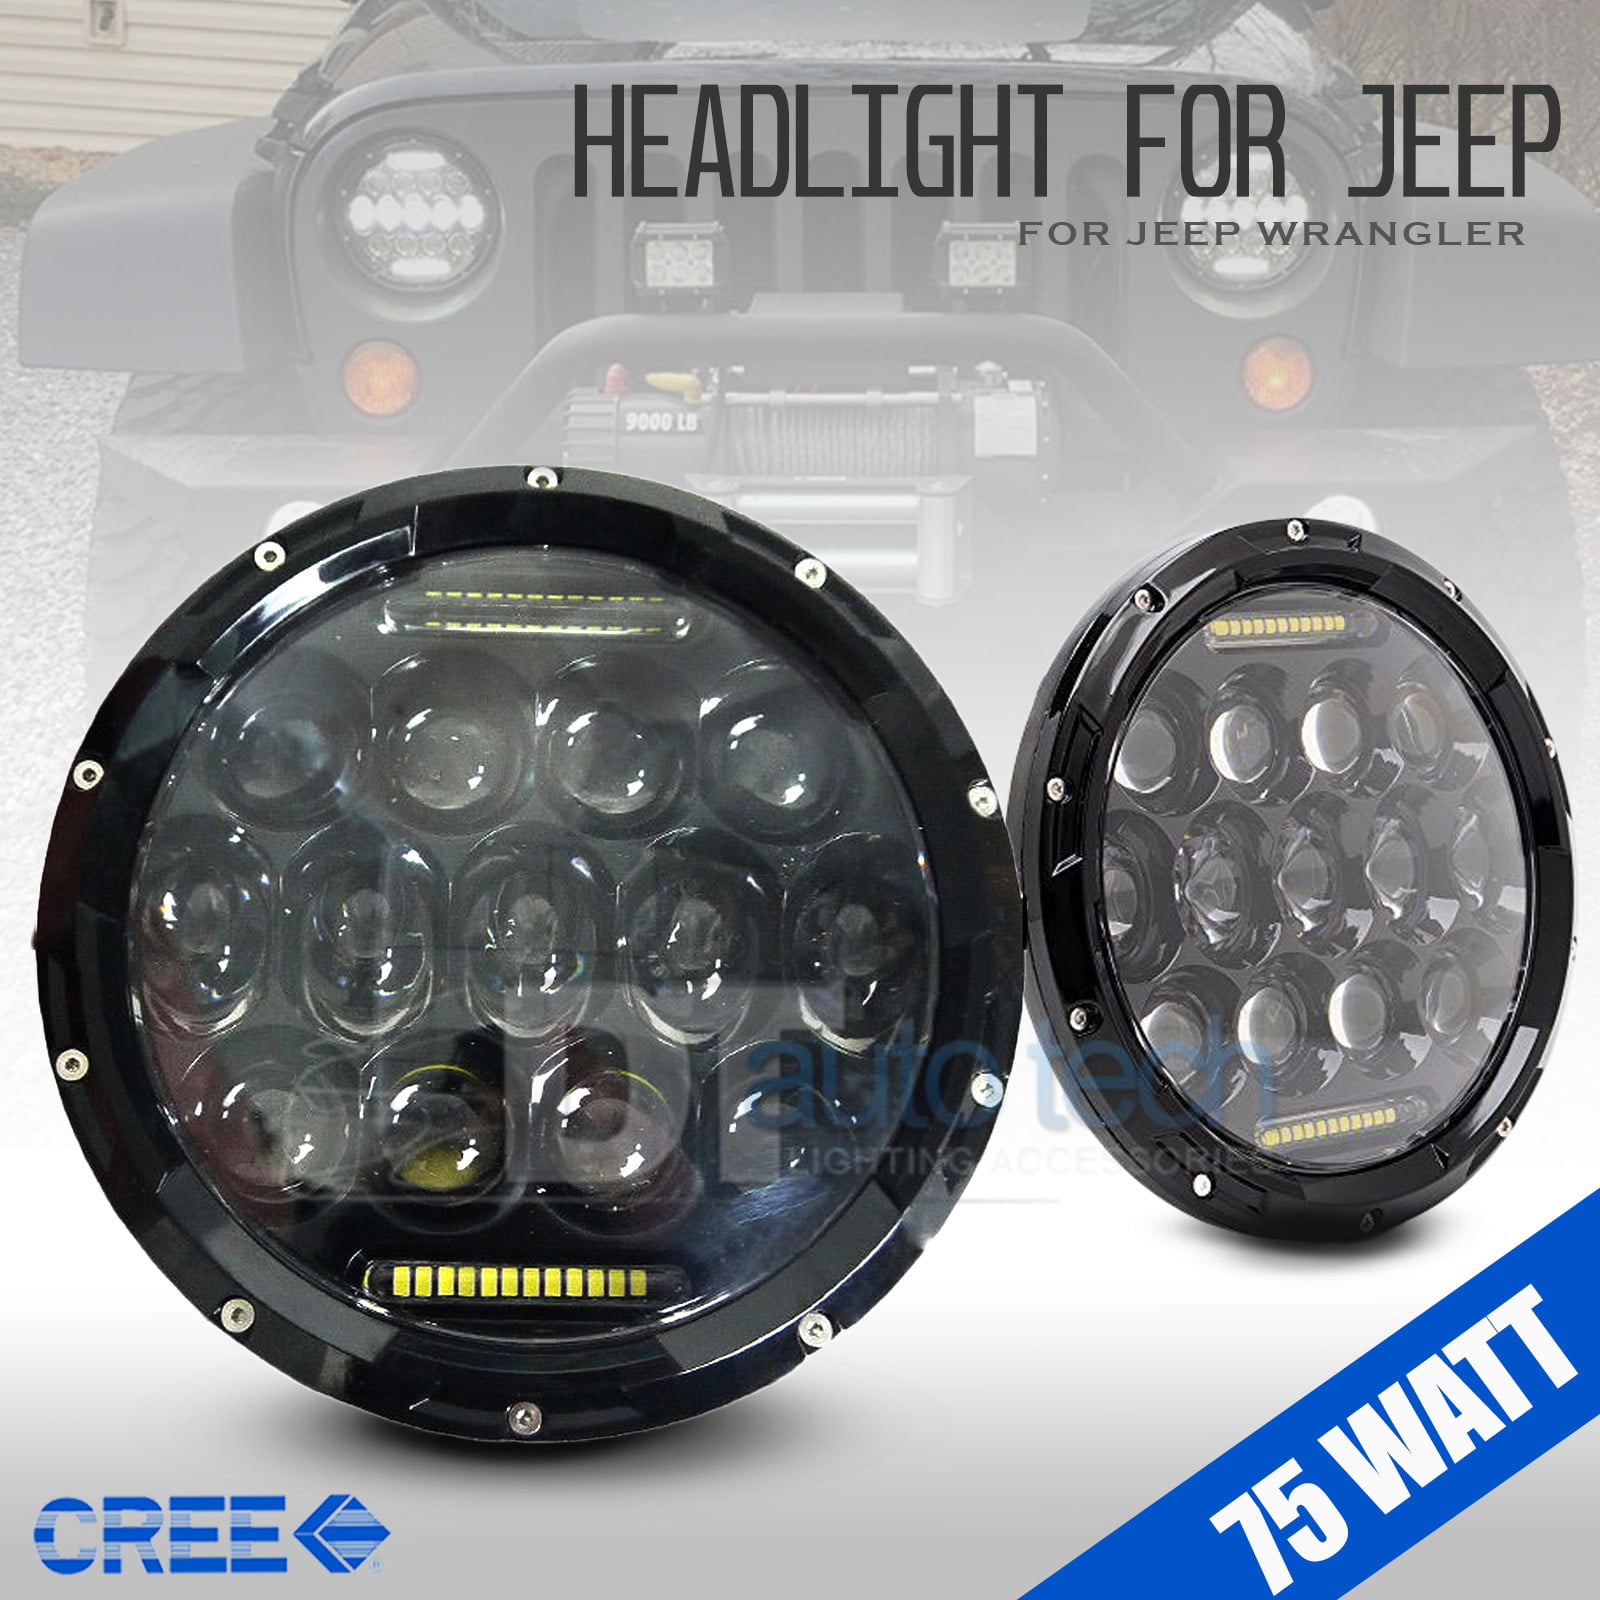 4 Inch Fog Lights Bulbs Set Kit for Jeep Wrangler JK LJ JKU TJ CJ Black COWONE 7inch Cree LED Headlights